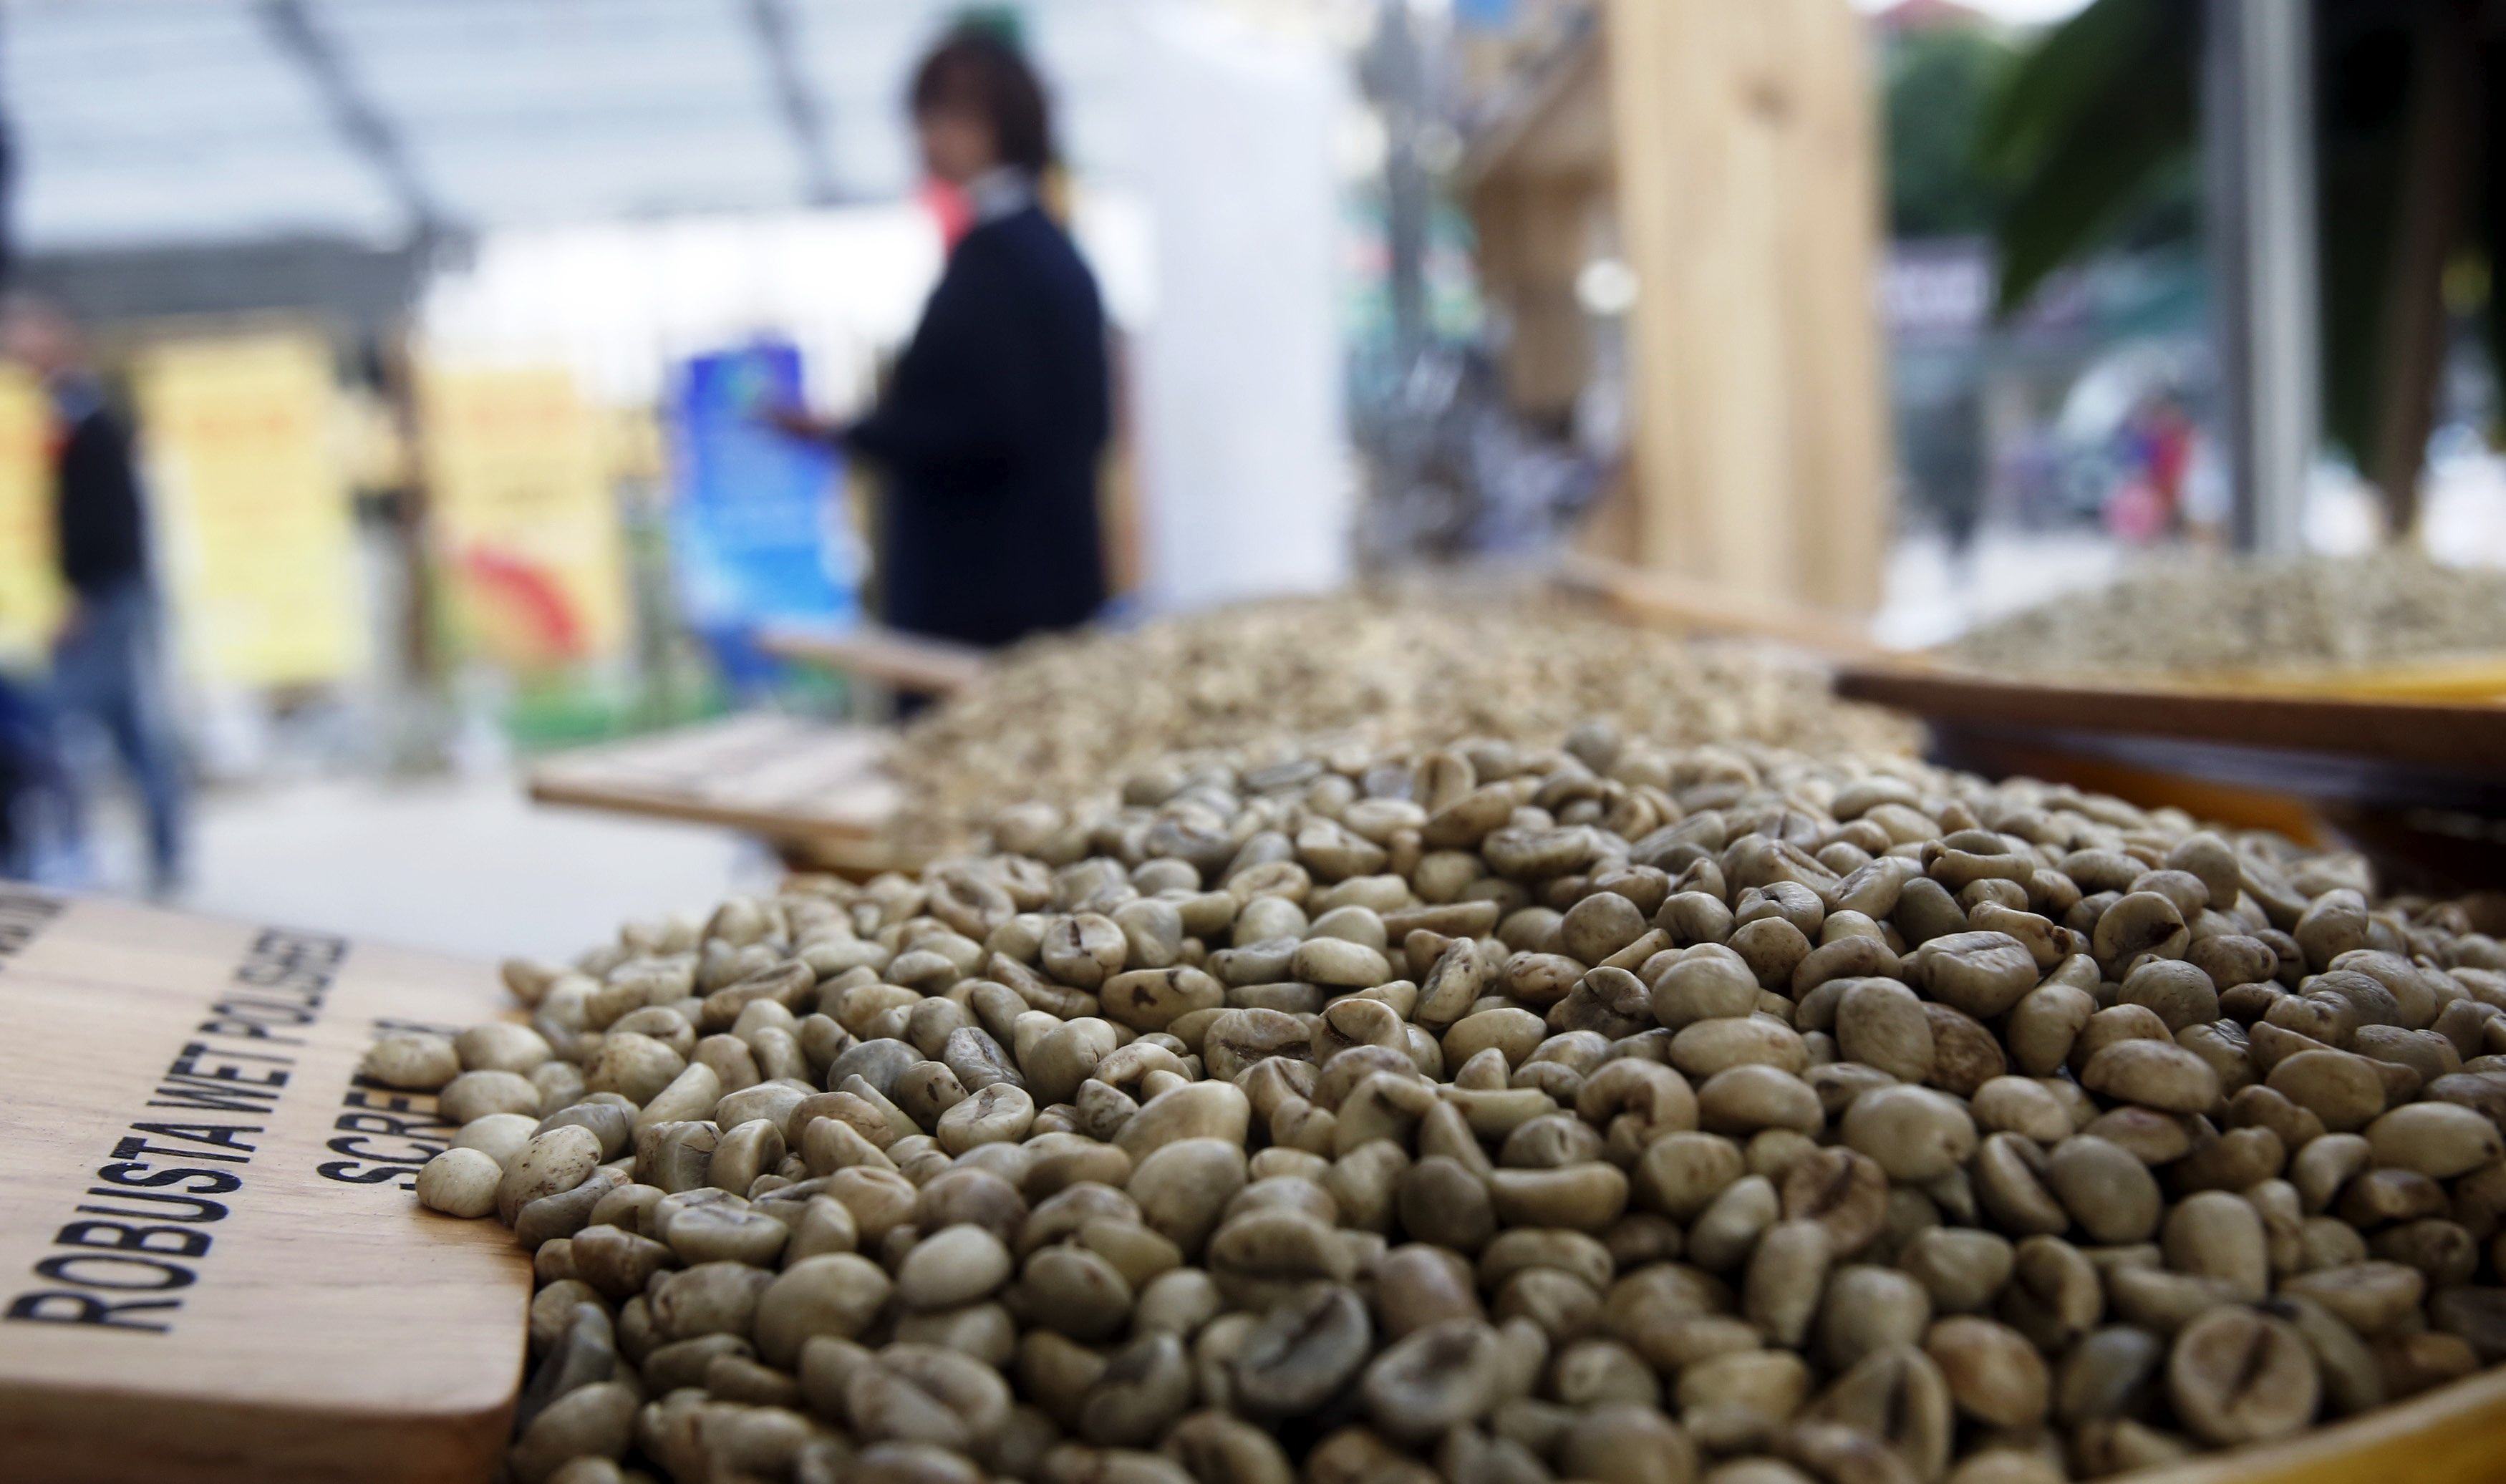 Softer loans won't quicken Vietnam coffee replanting